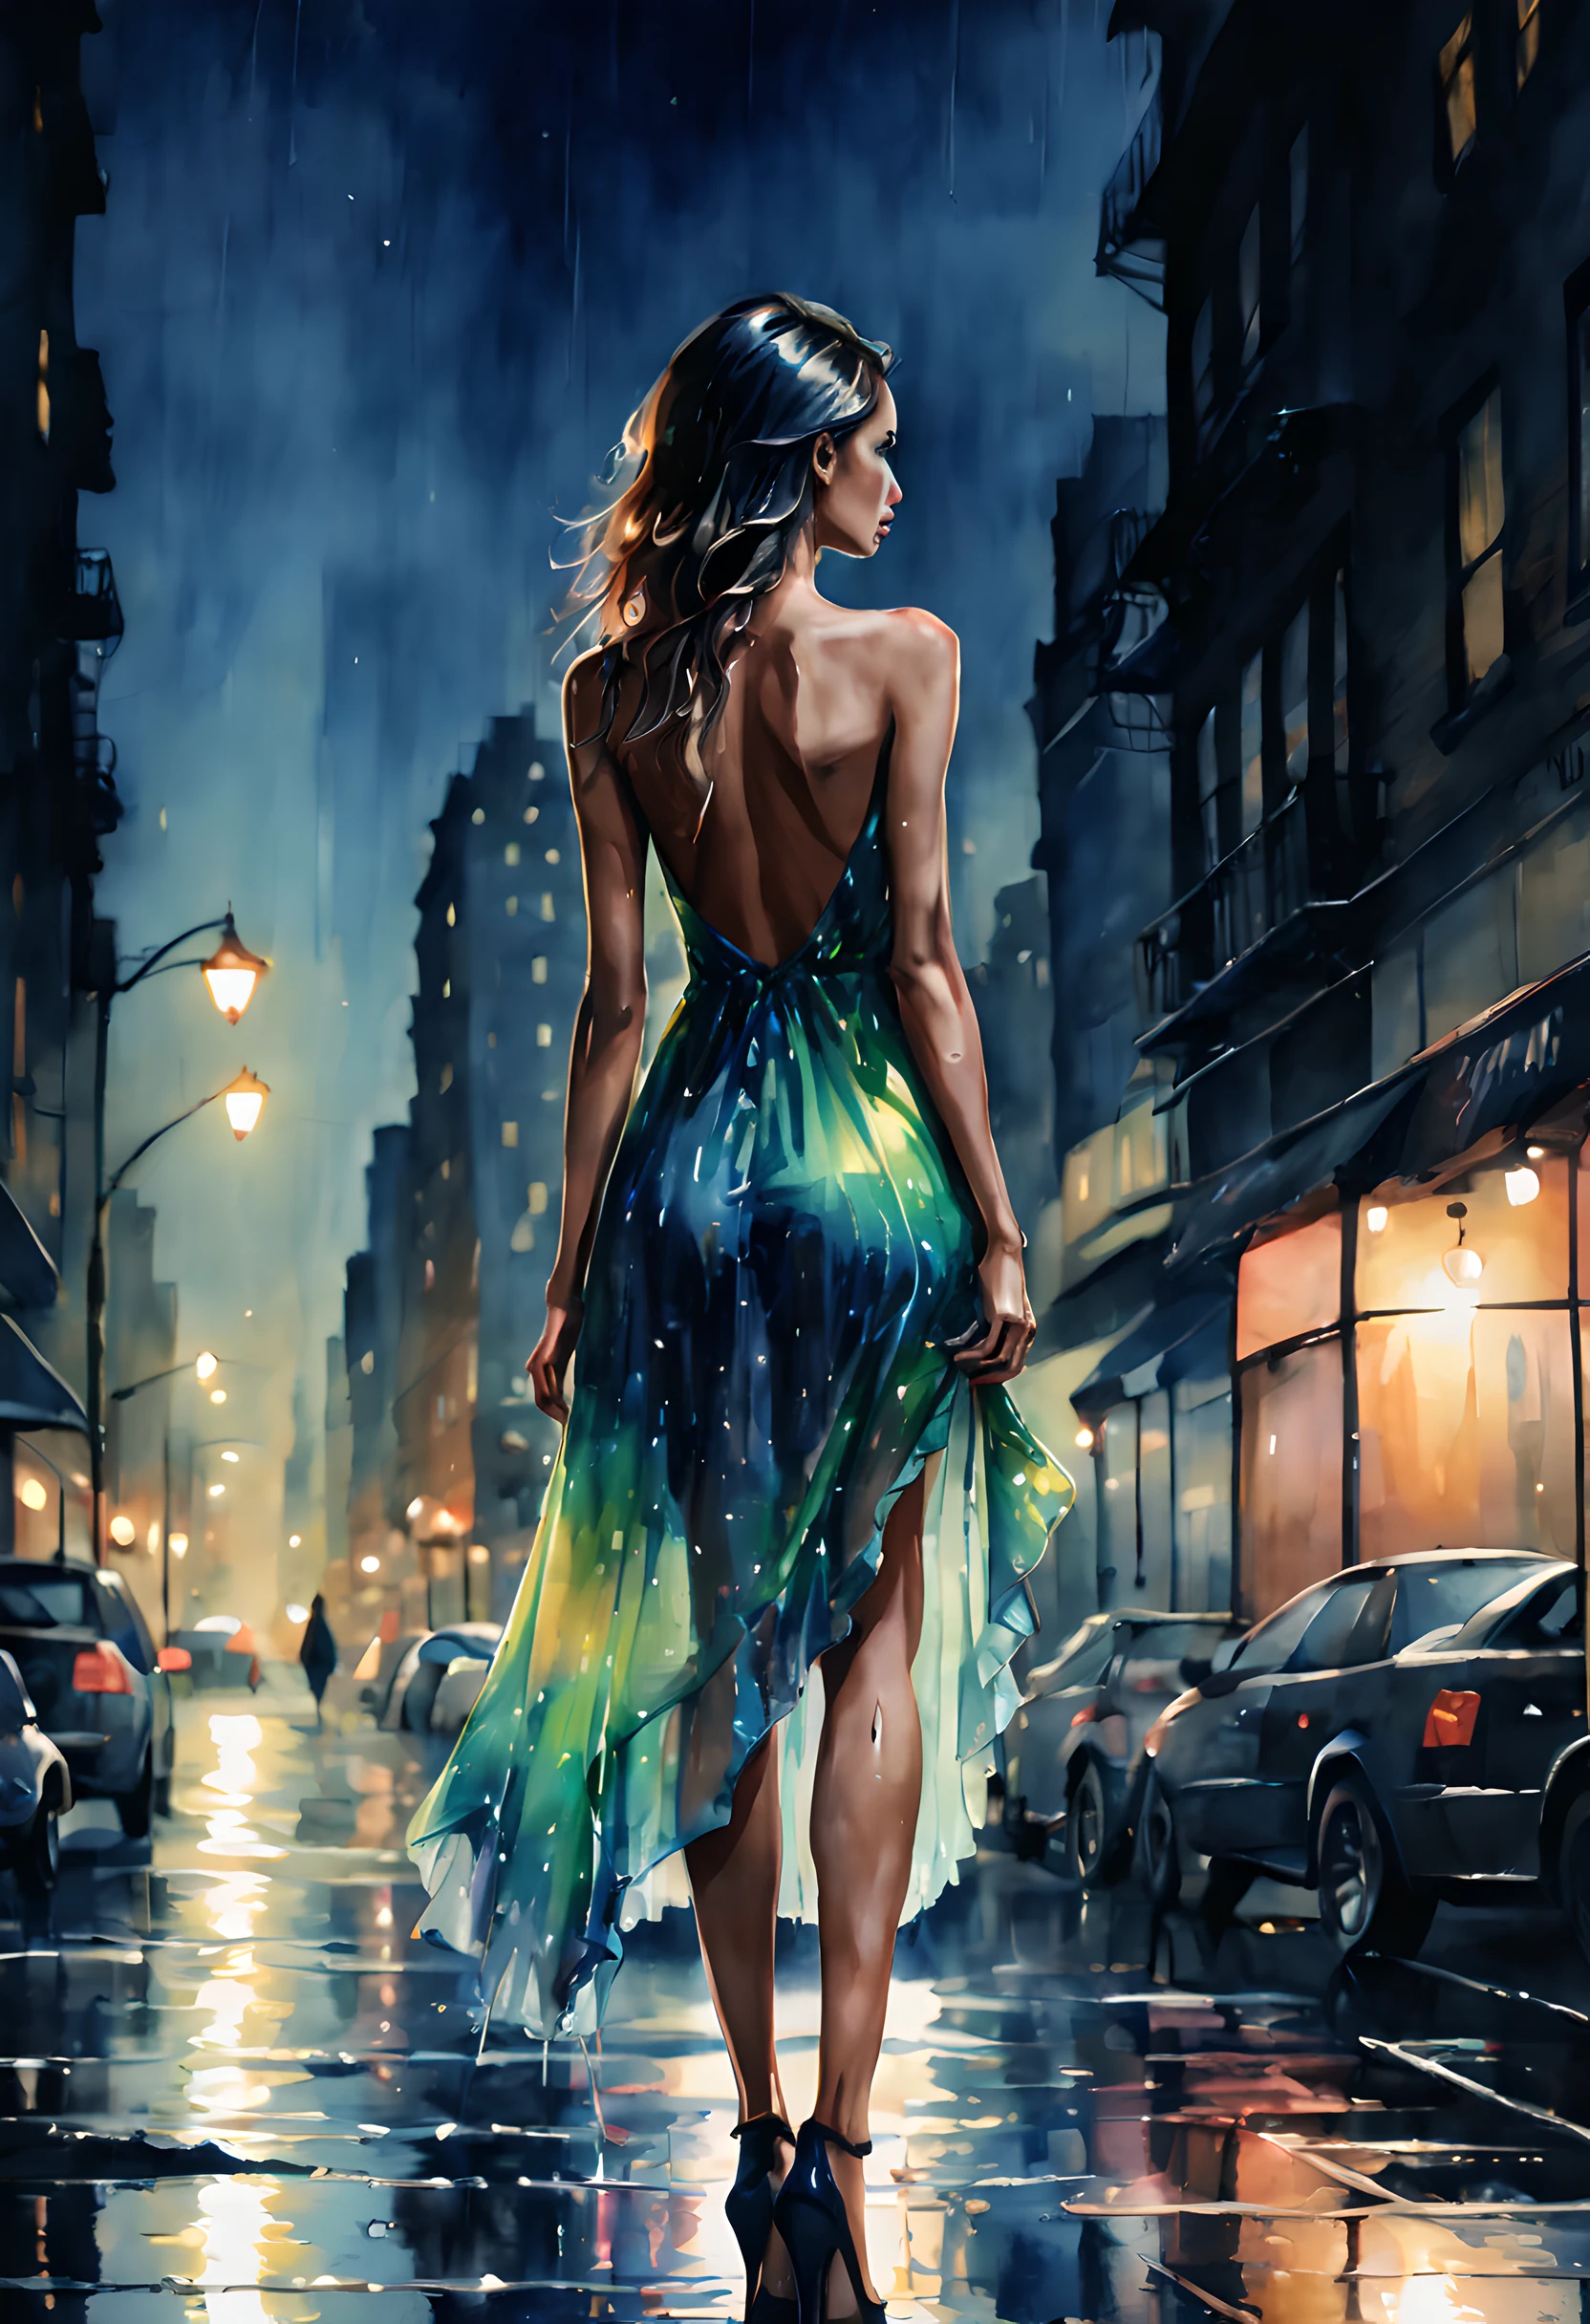 (rainy night:1.5), (ink and watercolor painting:1.5), (Tasteful:1.5), (ink and watercolor painting:1.5), (full color:1.5), 8k, 4k, (magic:1.5), (dripping paint;1.5), (night NY street:1.5), (1girl:1.3), solo, (wearing a dress:1.5), (slender:1.5), (model), (brazilian super model:1.5), (back shot:1.5), (full body:1.5), (beautiful city lighting:1.5), (light reflection:1.3),